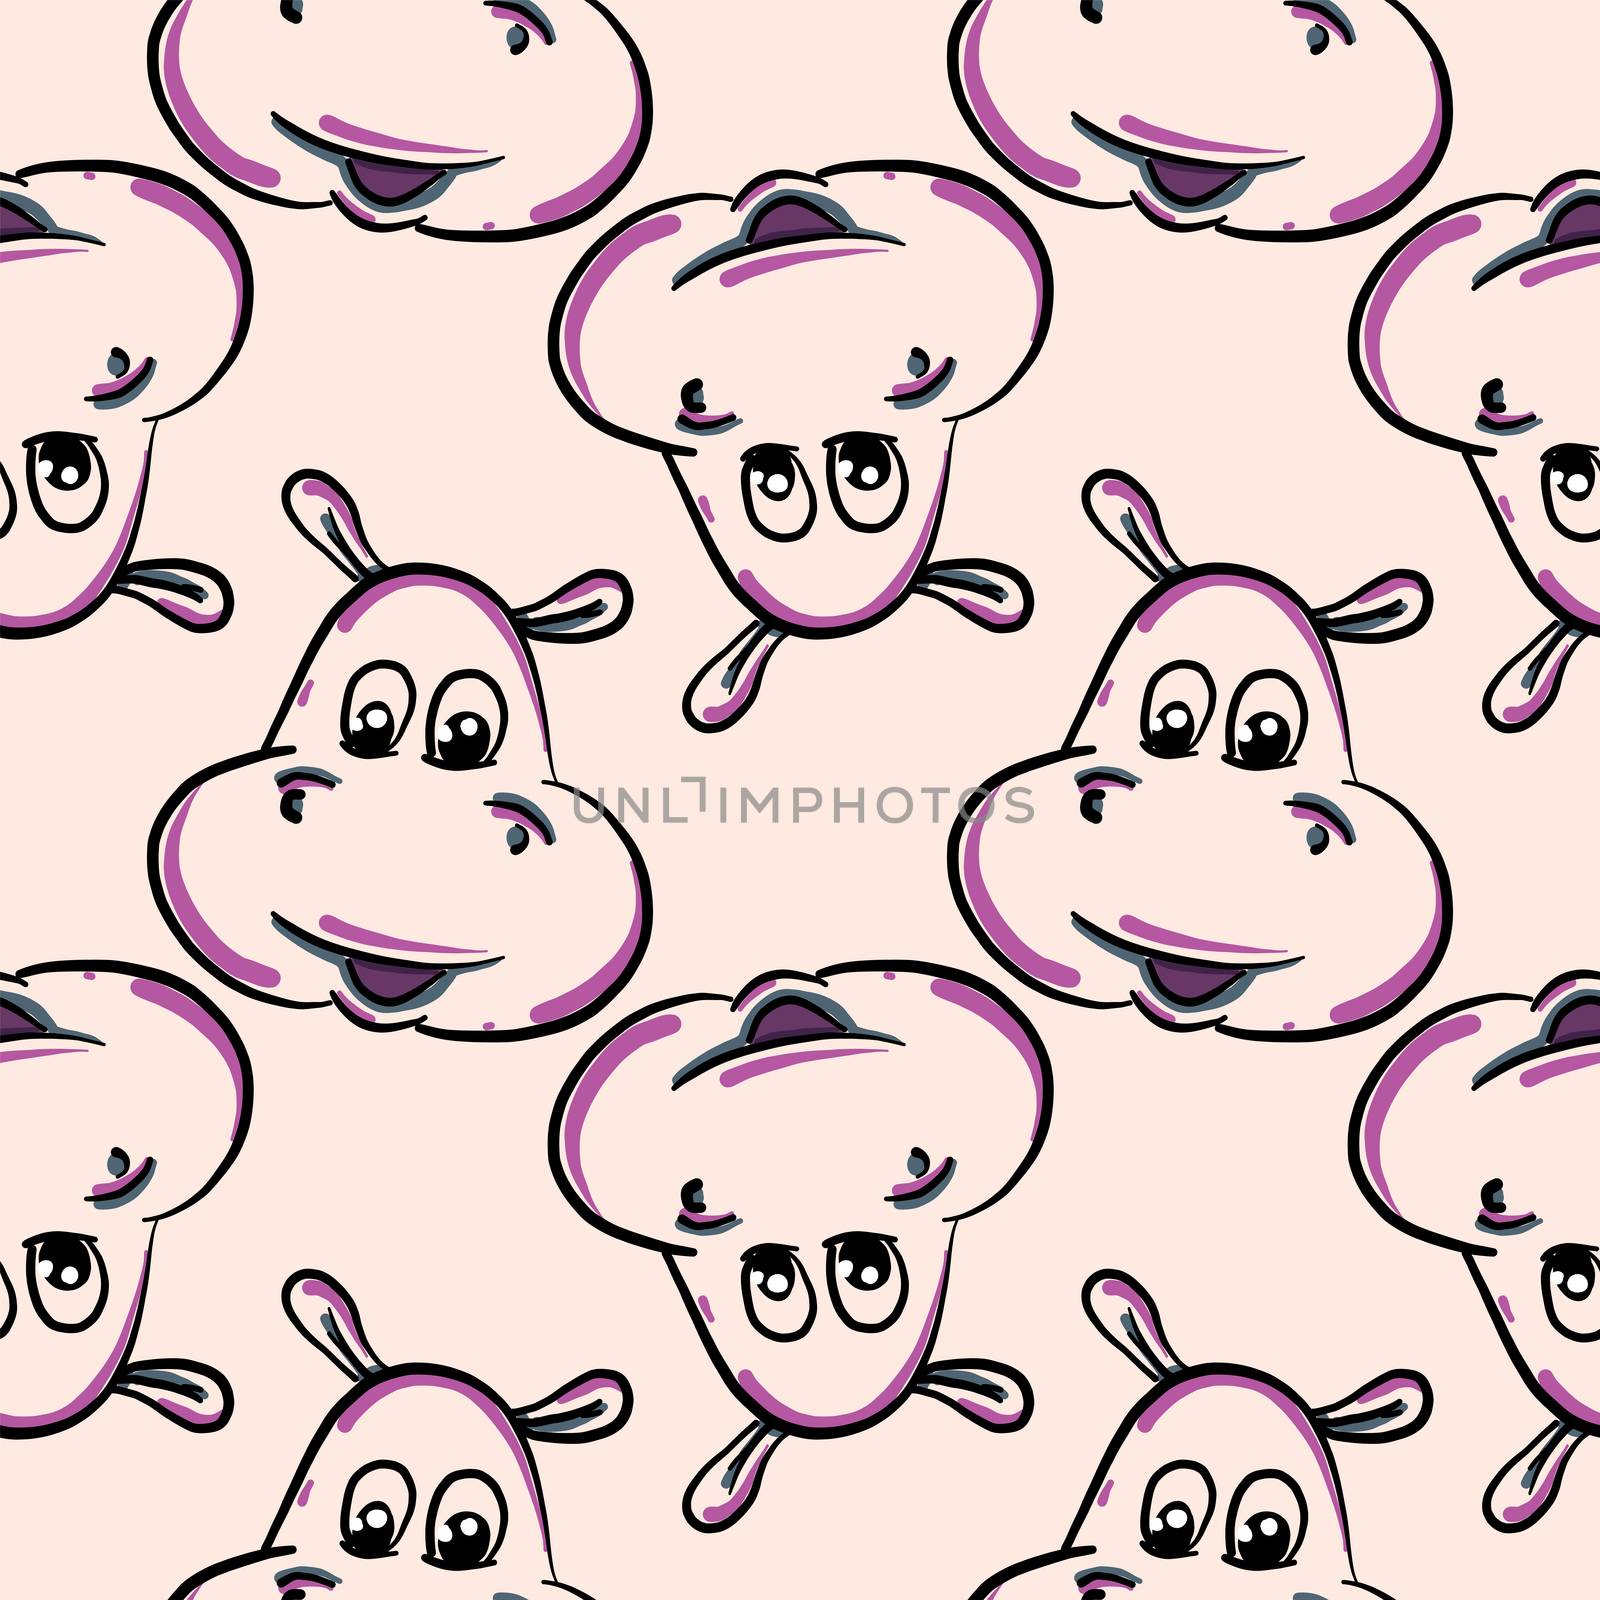 Hippo pattern , illustration, vector on white background by Morphart